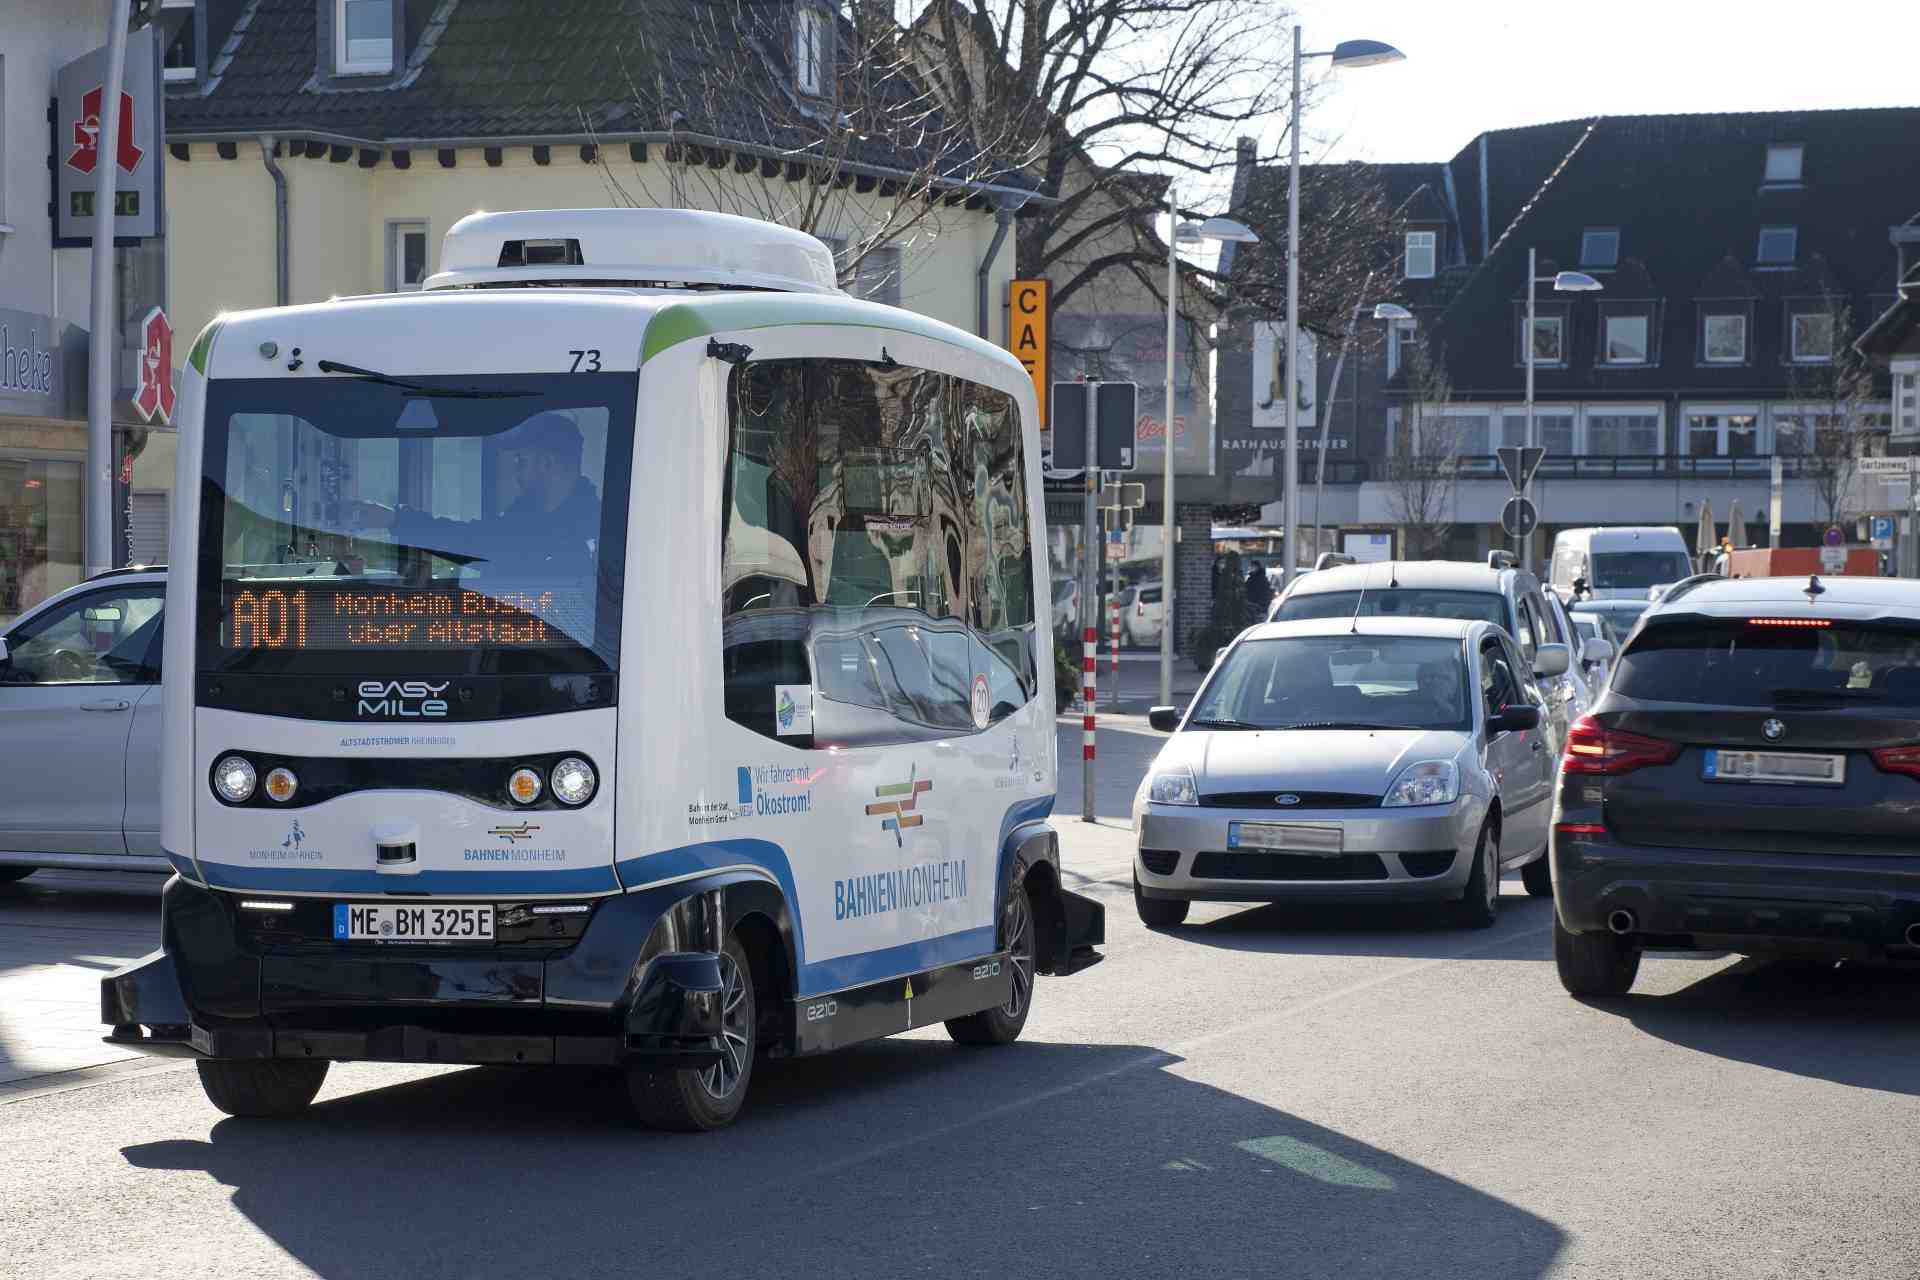 Autonomous Vehicles in Mixed Traffic